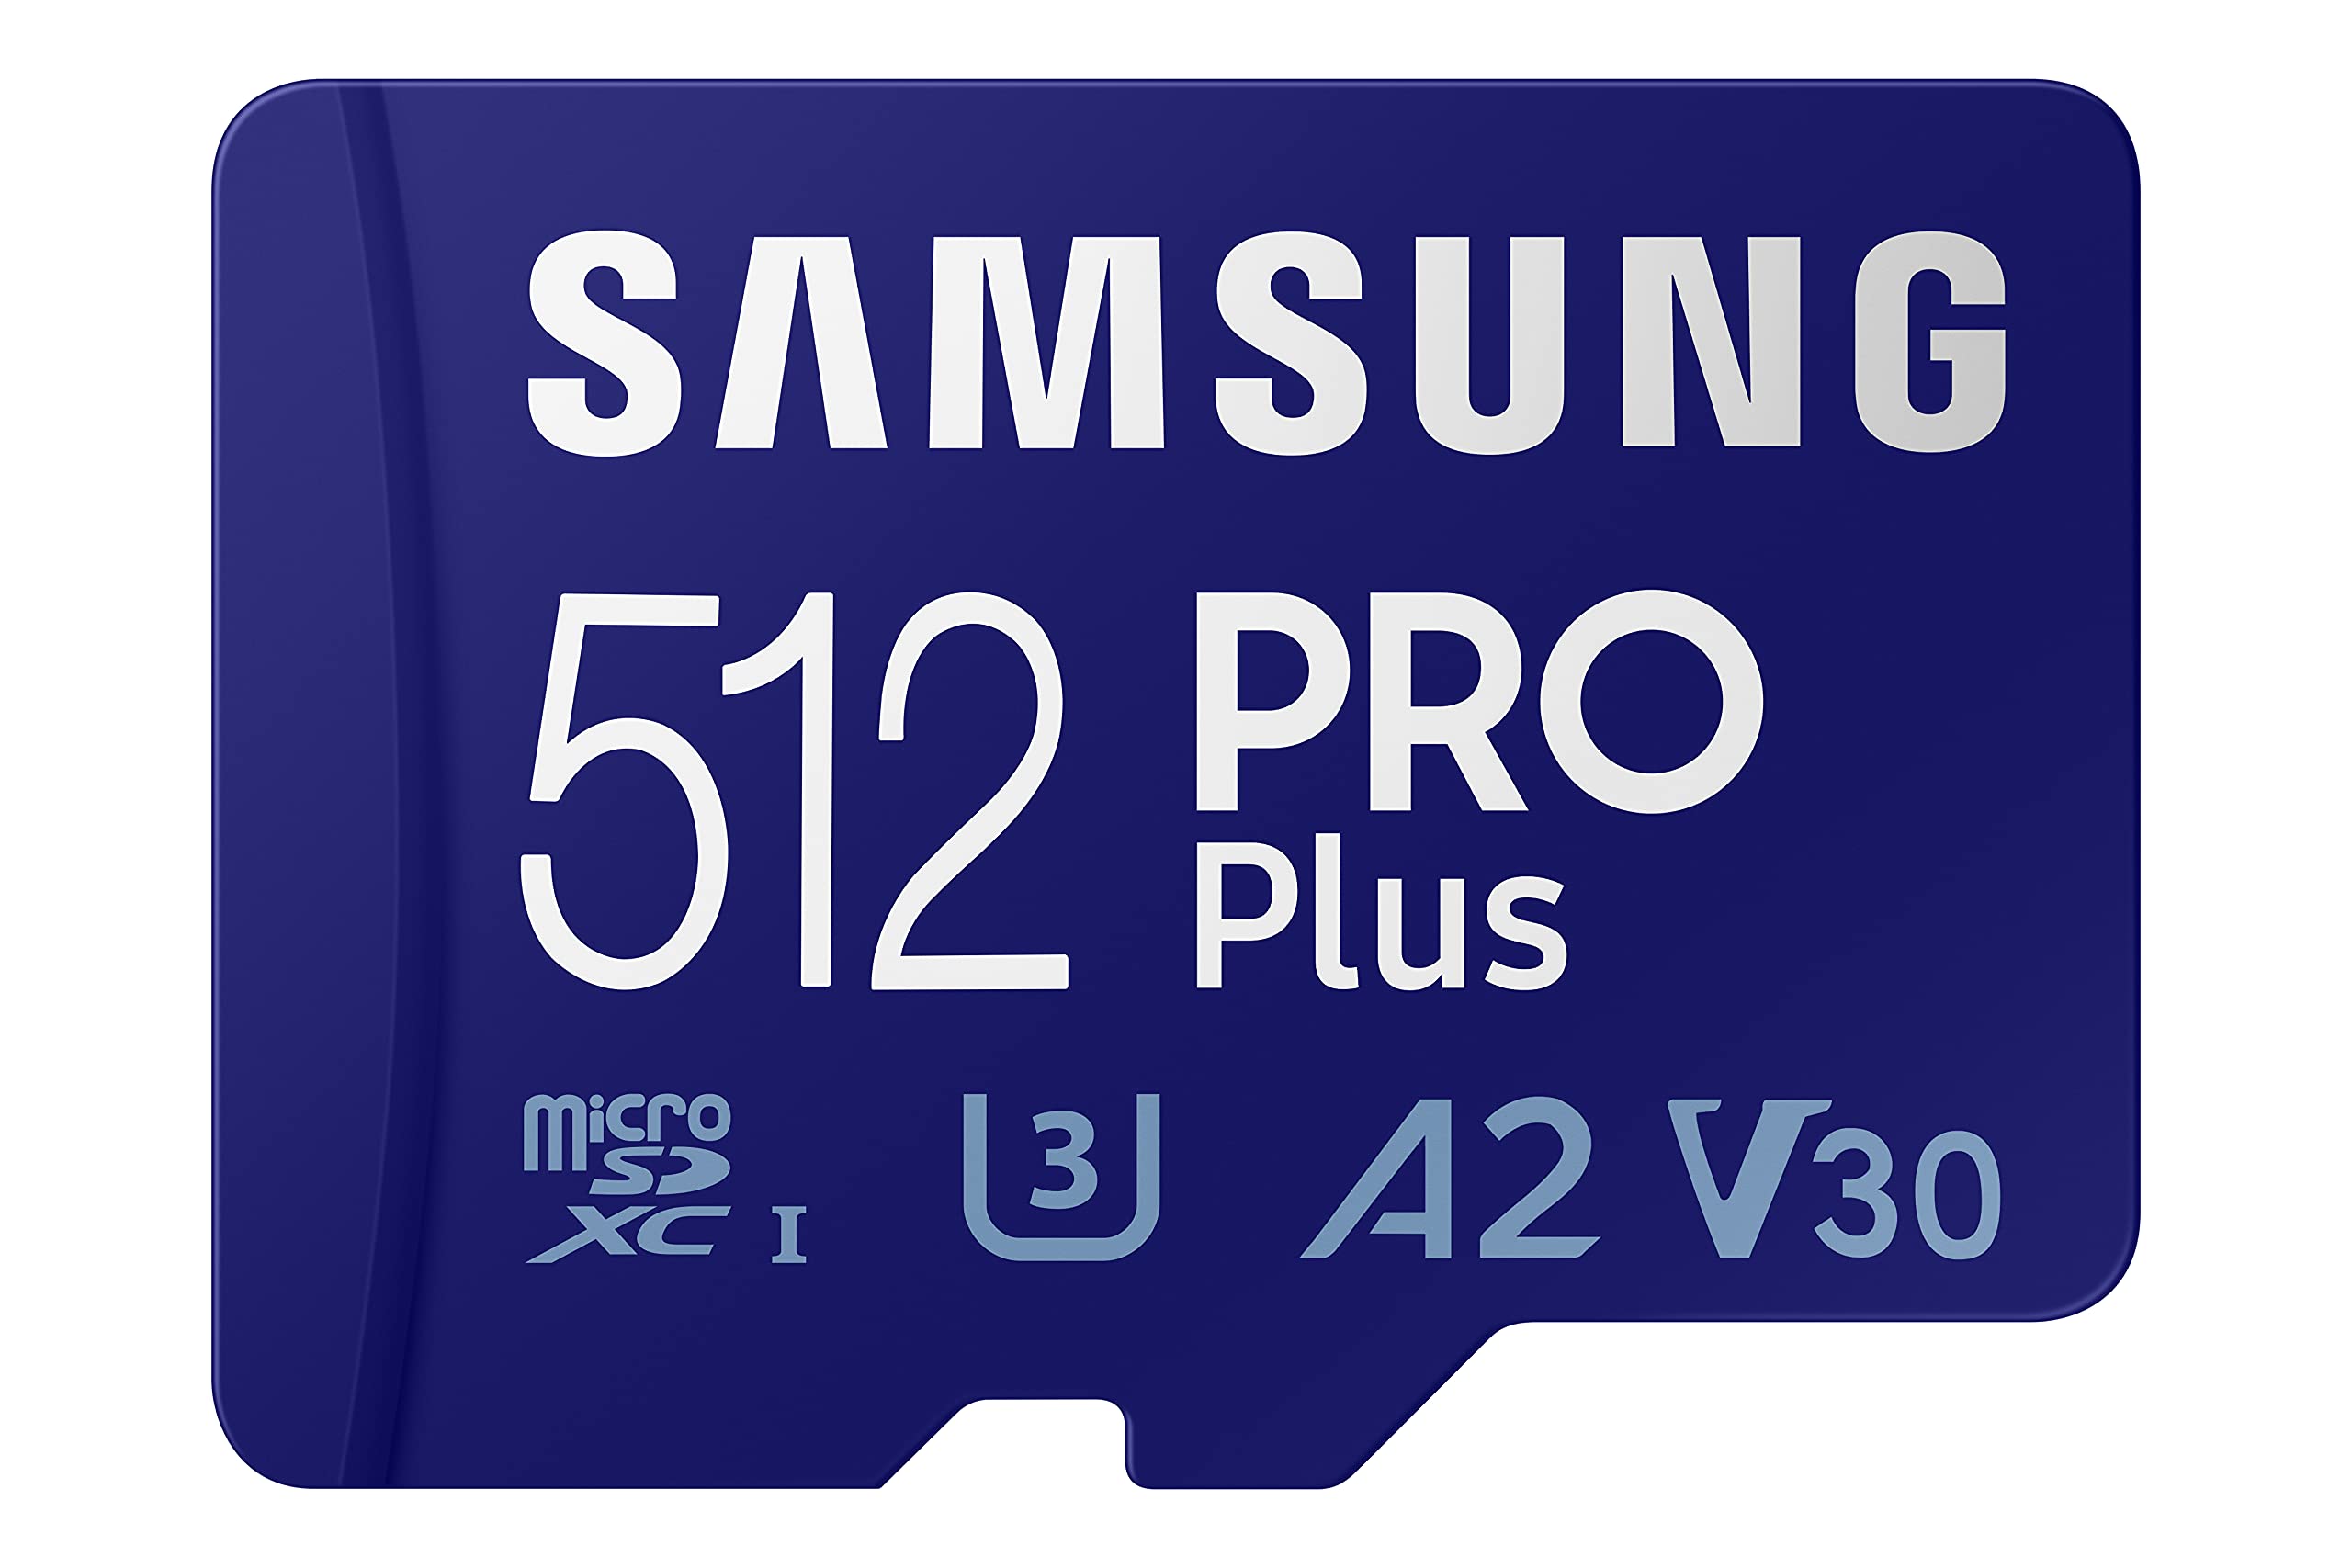 512GB Samsung PRO Plus U3 microSD Memory Card w/ Adapter $30 + Free Shipping w/ Prime or on orders $35+